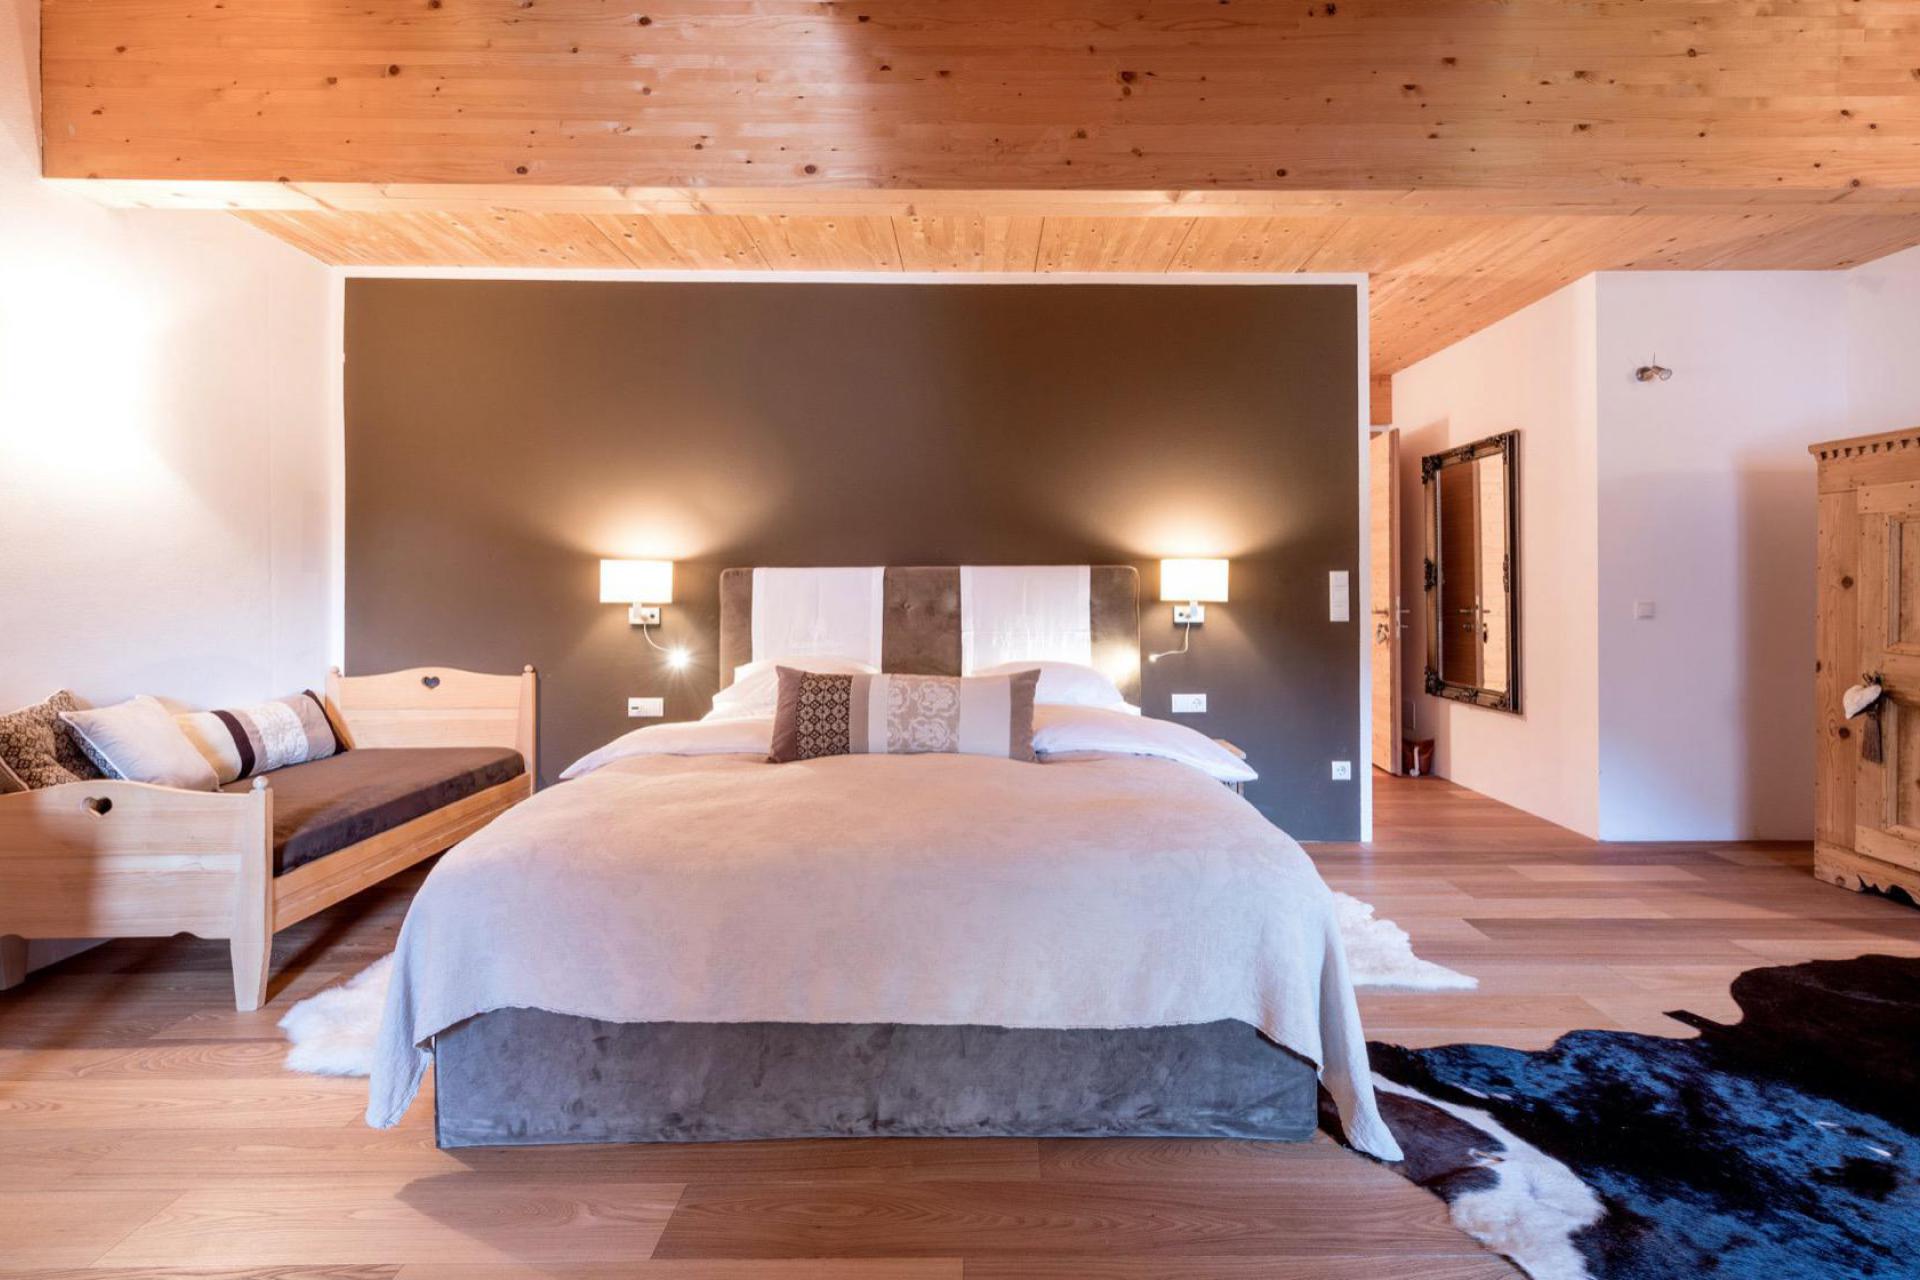 Agriturismo Dolomites Luxury agriturismo with B&B rooms and Sudtiroler hospitality